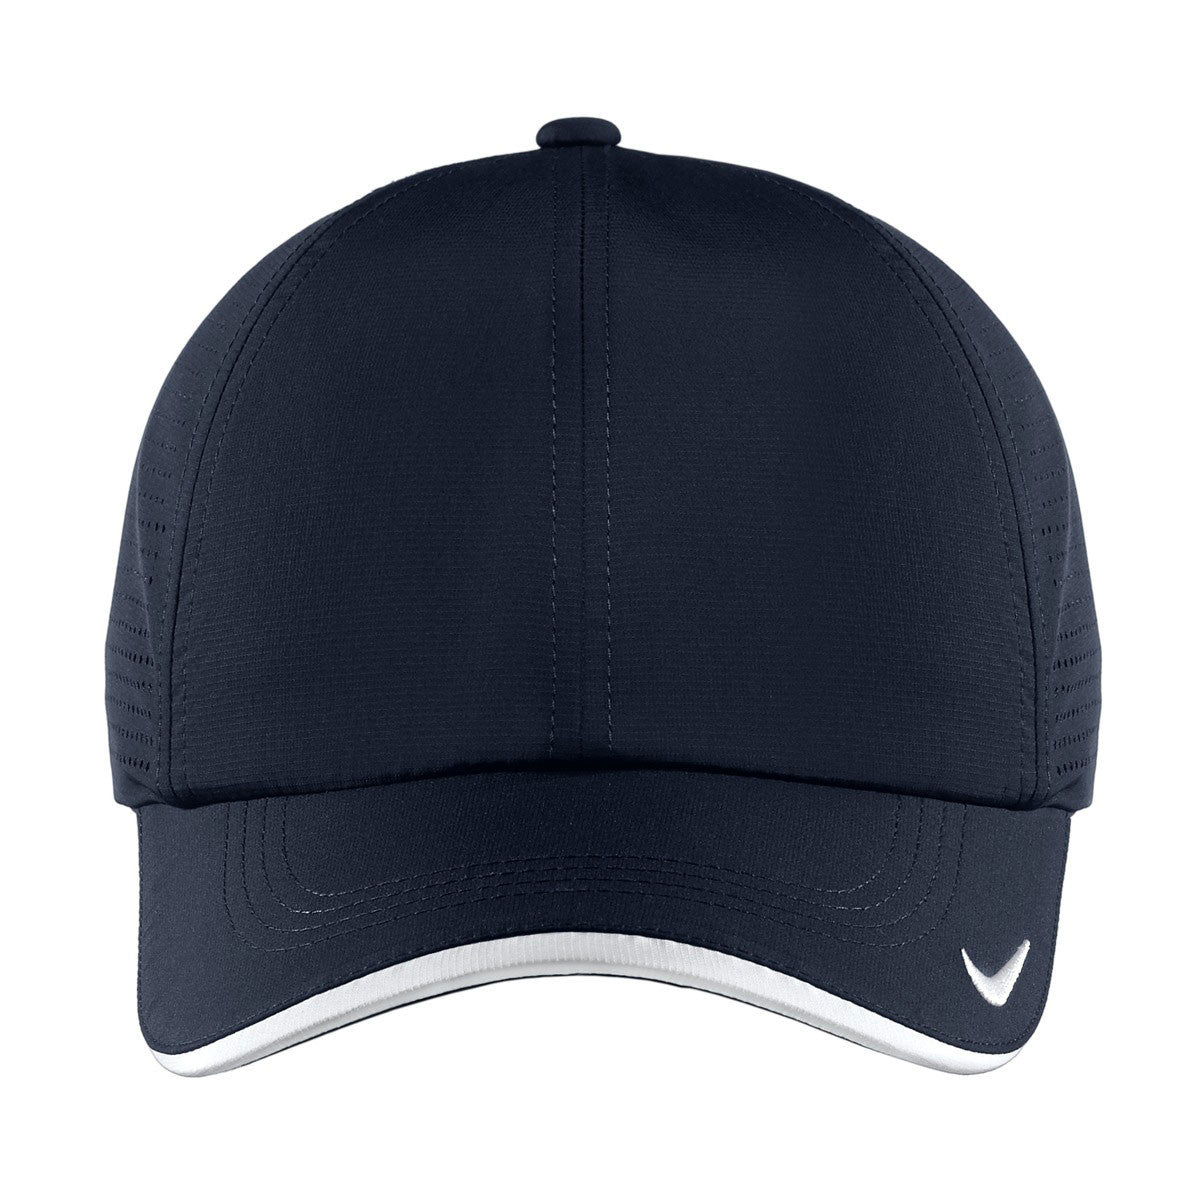 Nike Navy Swoosh Cap